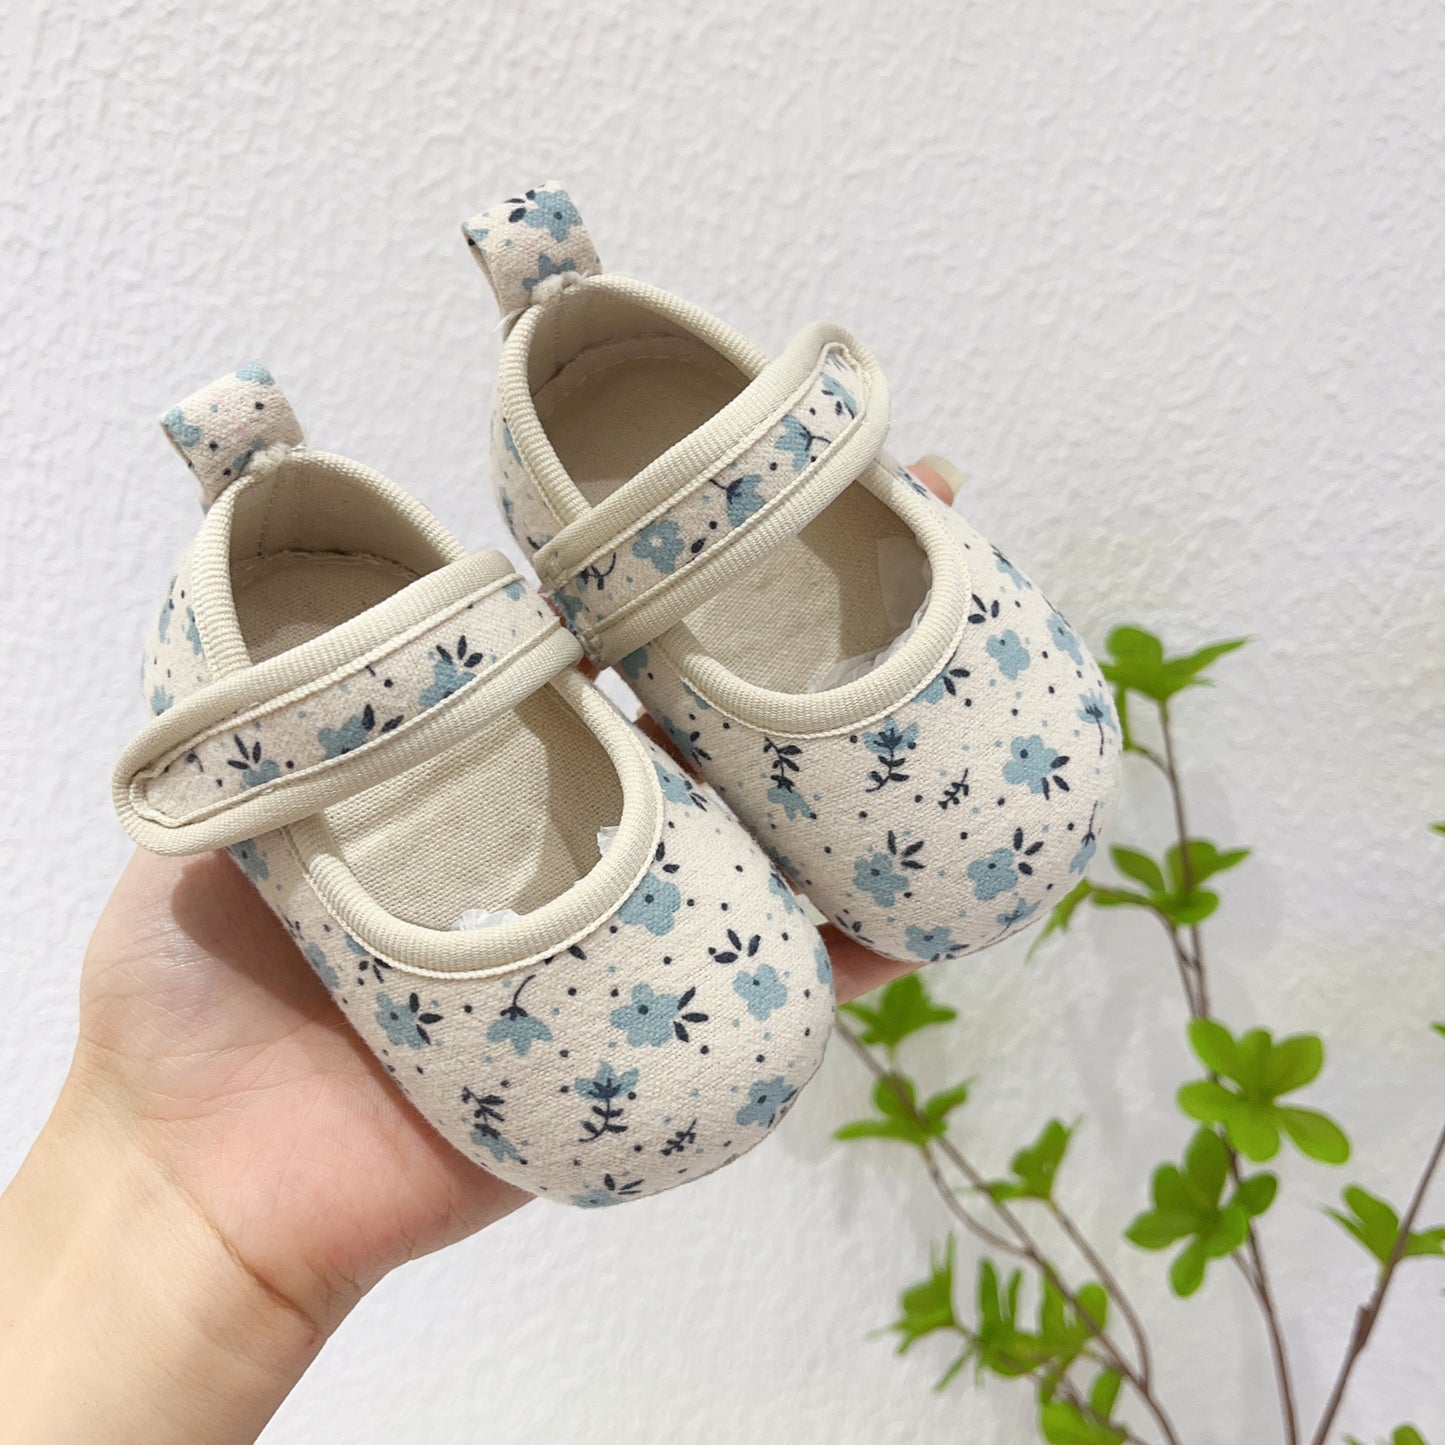 Floral Design Baby Girl Toddler Shoes